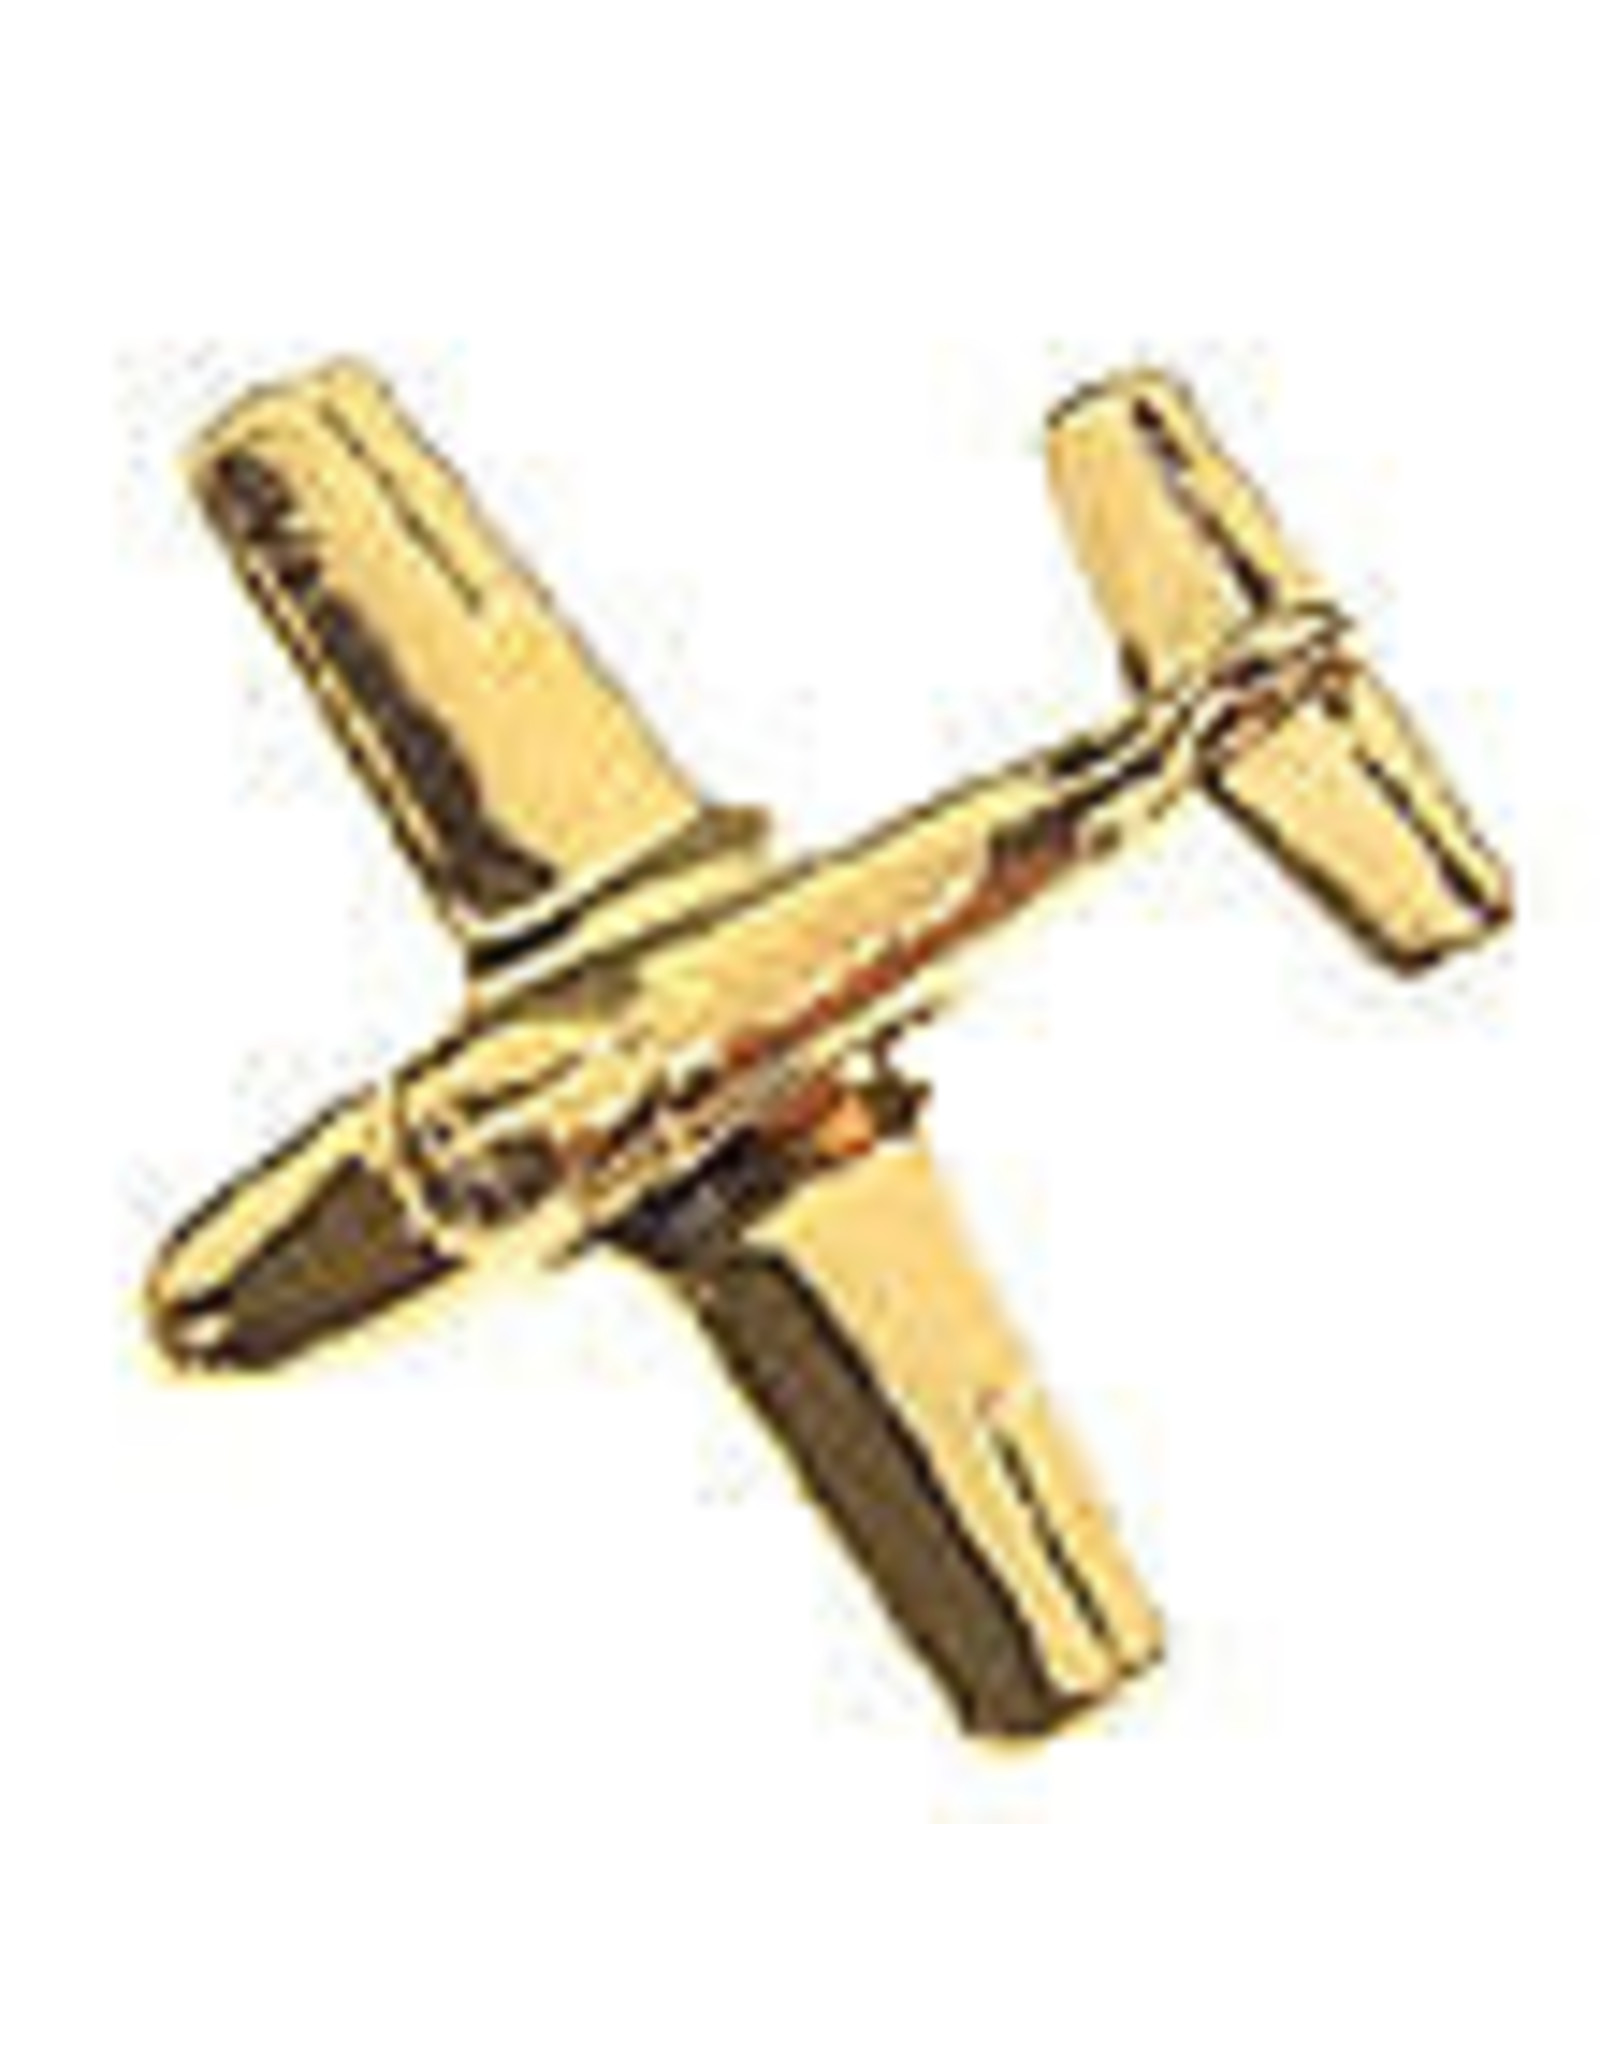 Clivedon Pin Badge T-37 Tweet, Pin, gold